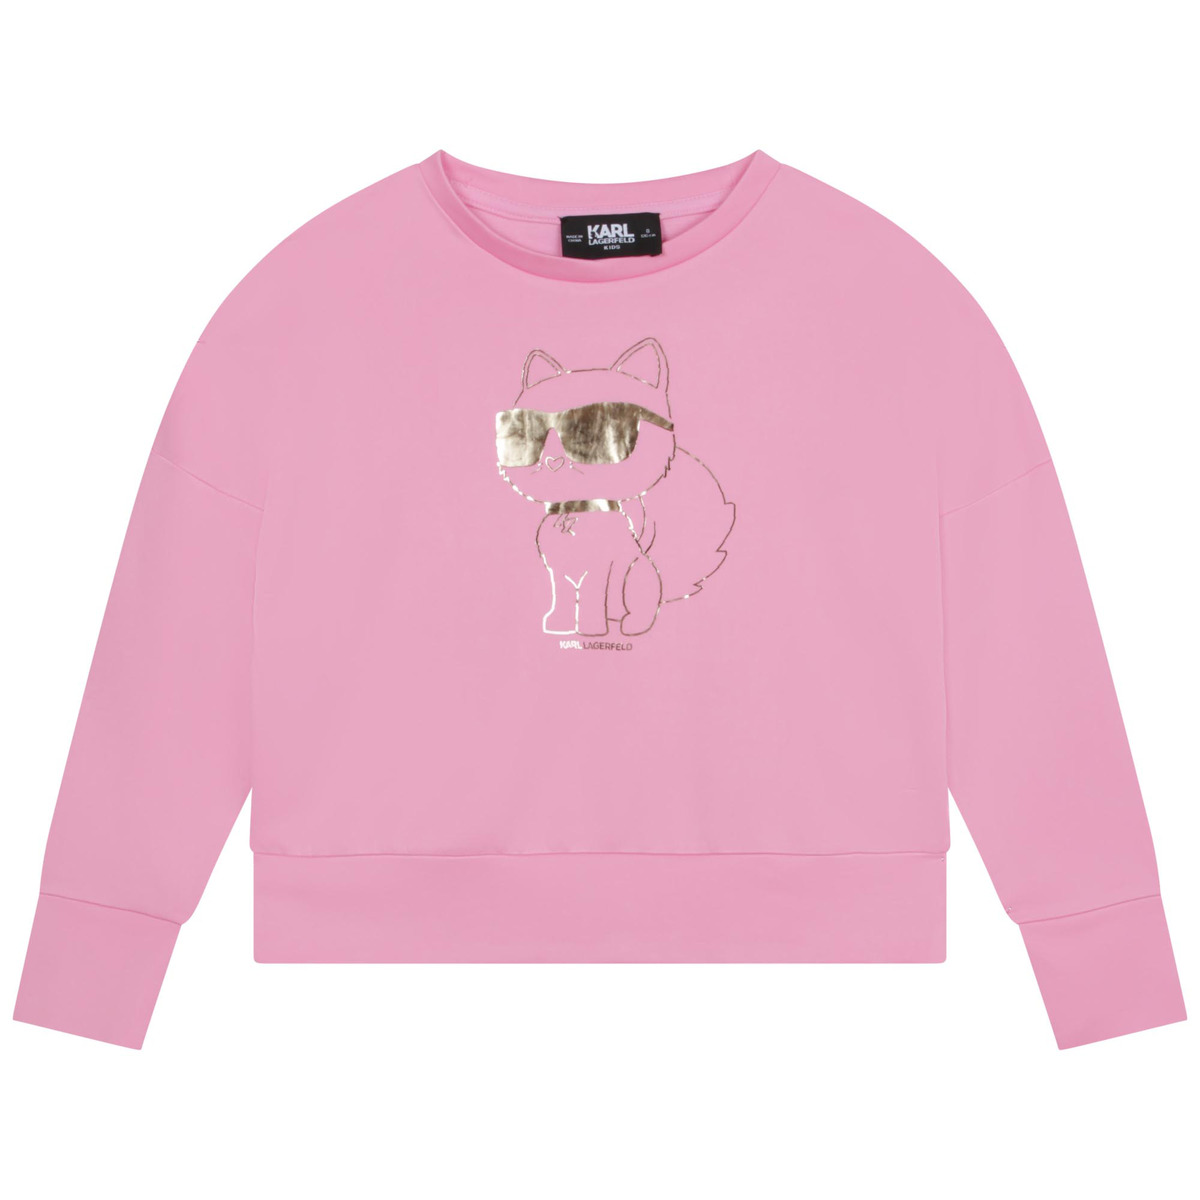 textil Flickor Sweatshirts Karl Lagerfeld Z15425-465-C Rosa